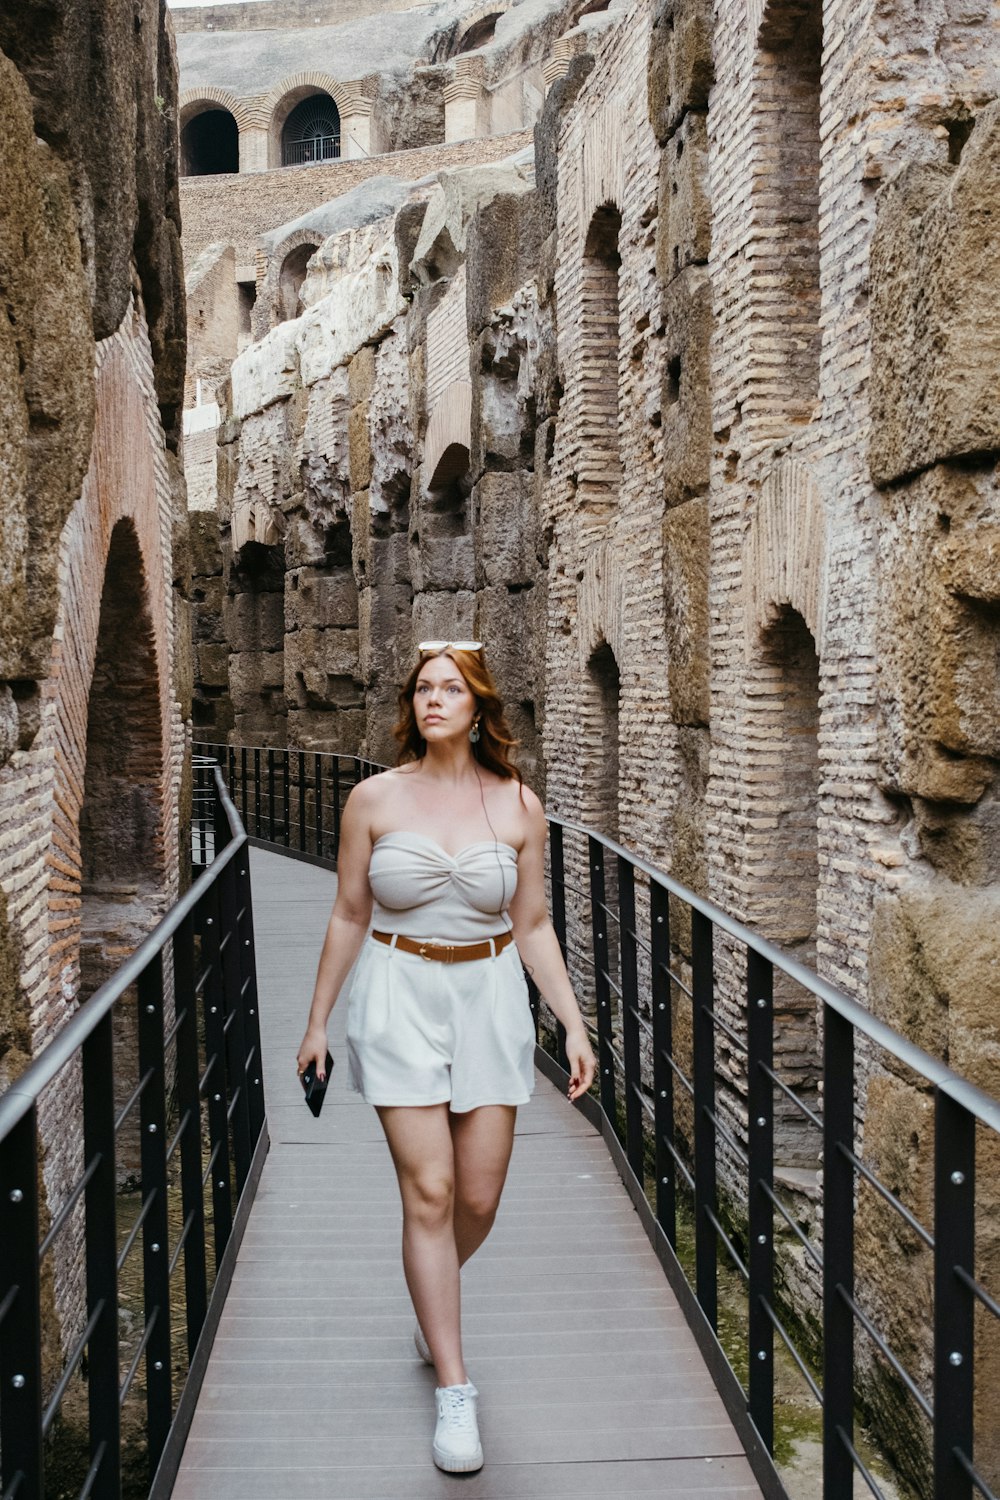 a woman in a white dress walking down a walkway